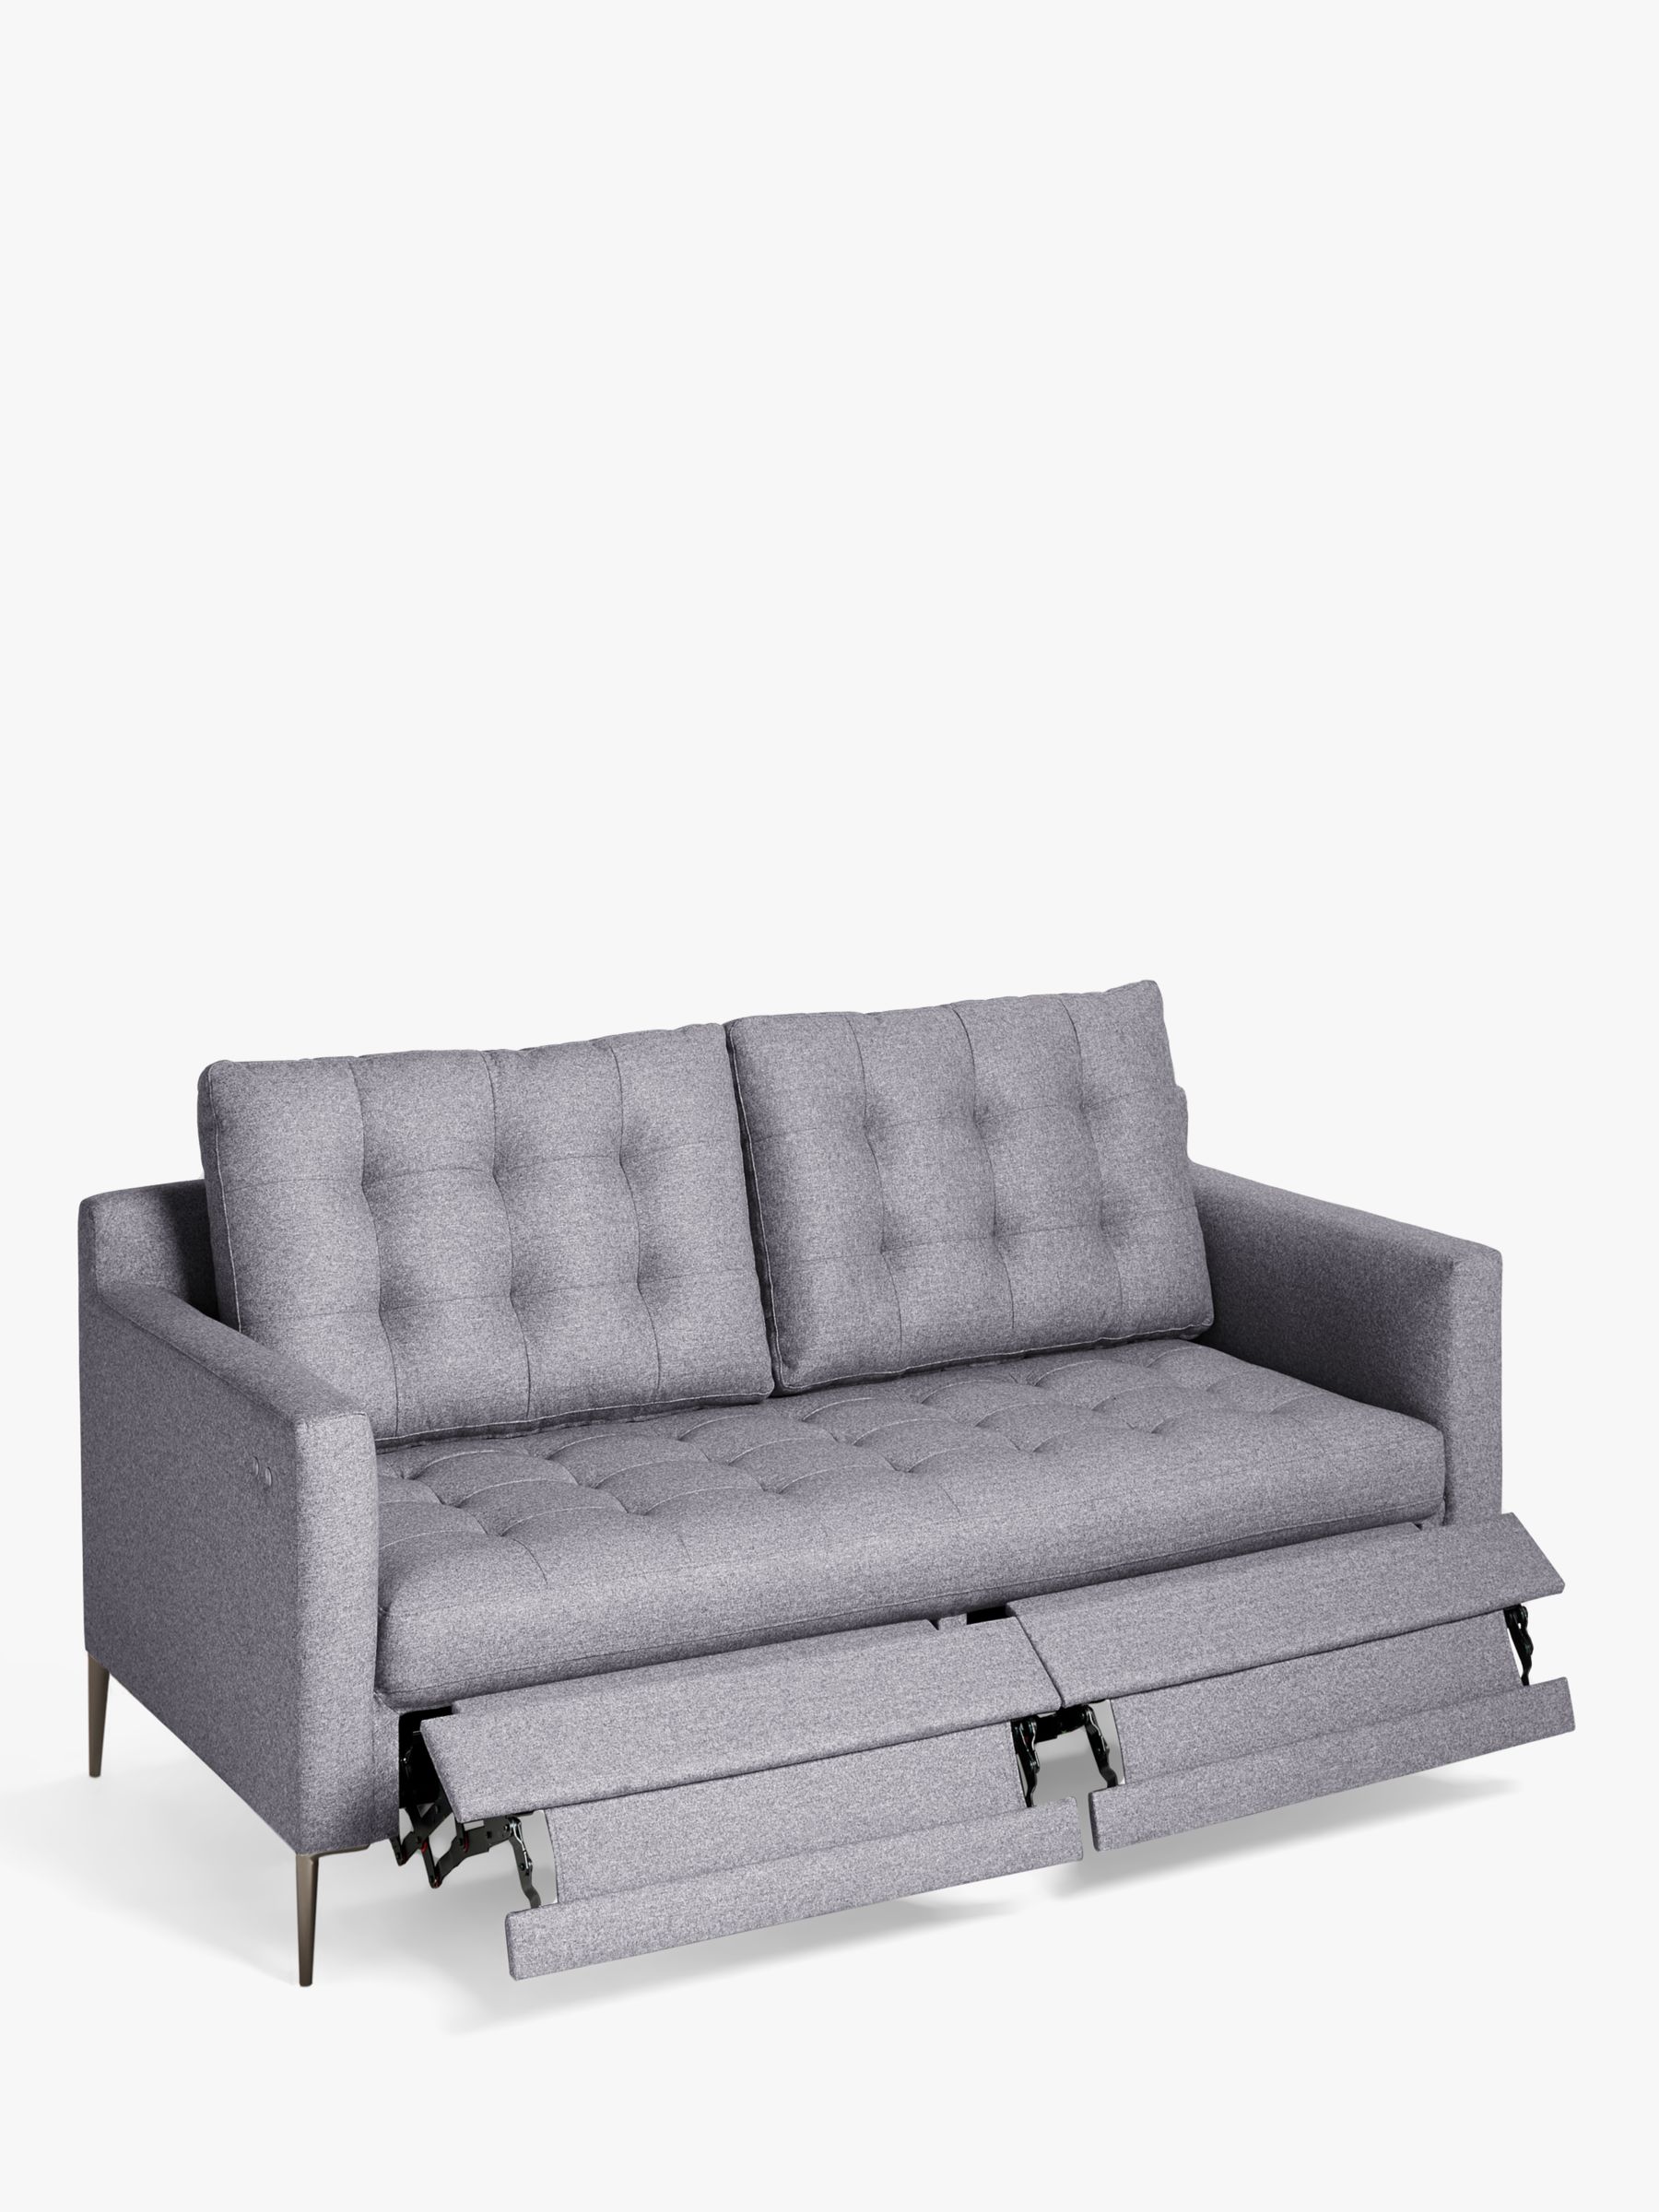 Photo of John lewis draper motion medium 2 seater sofa with footrest mechanism metal leg